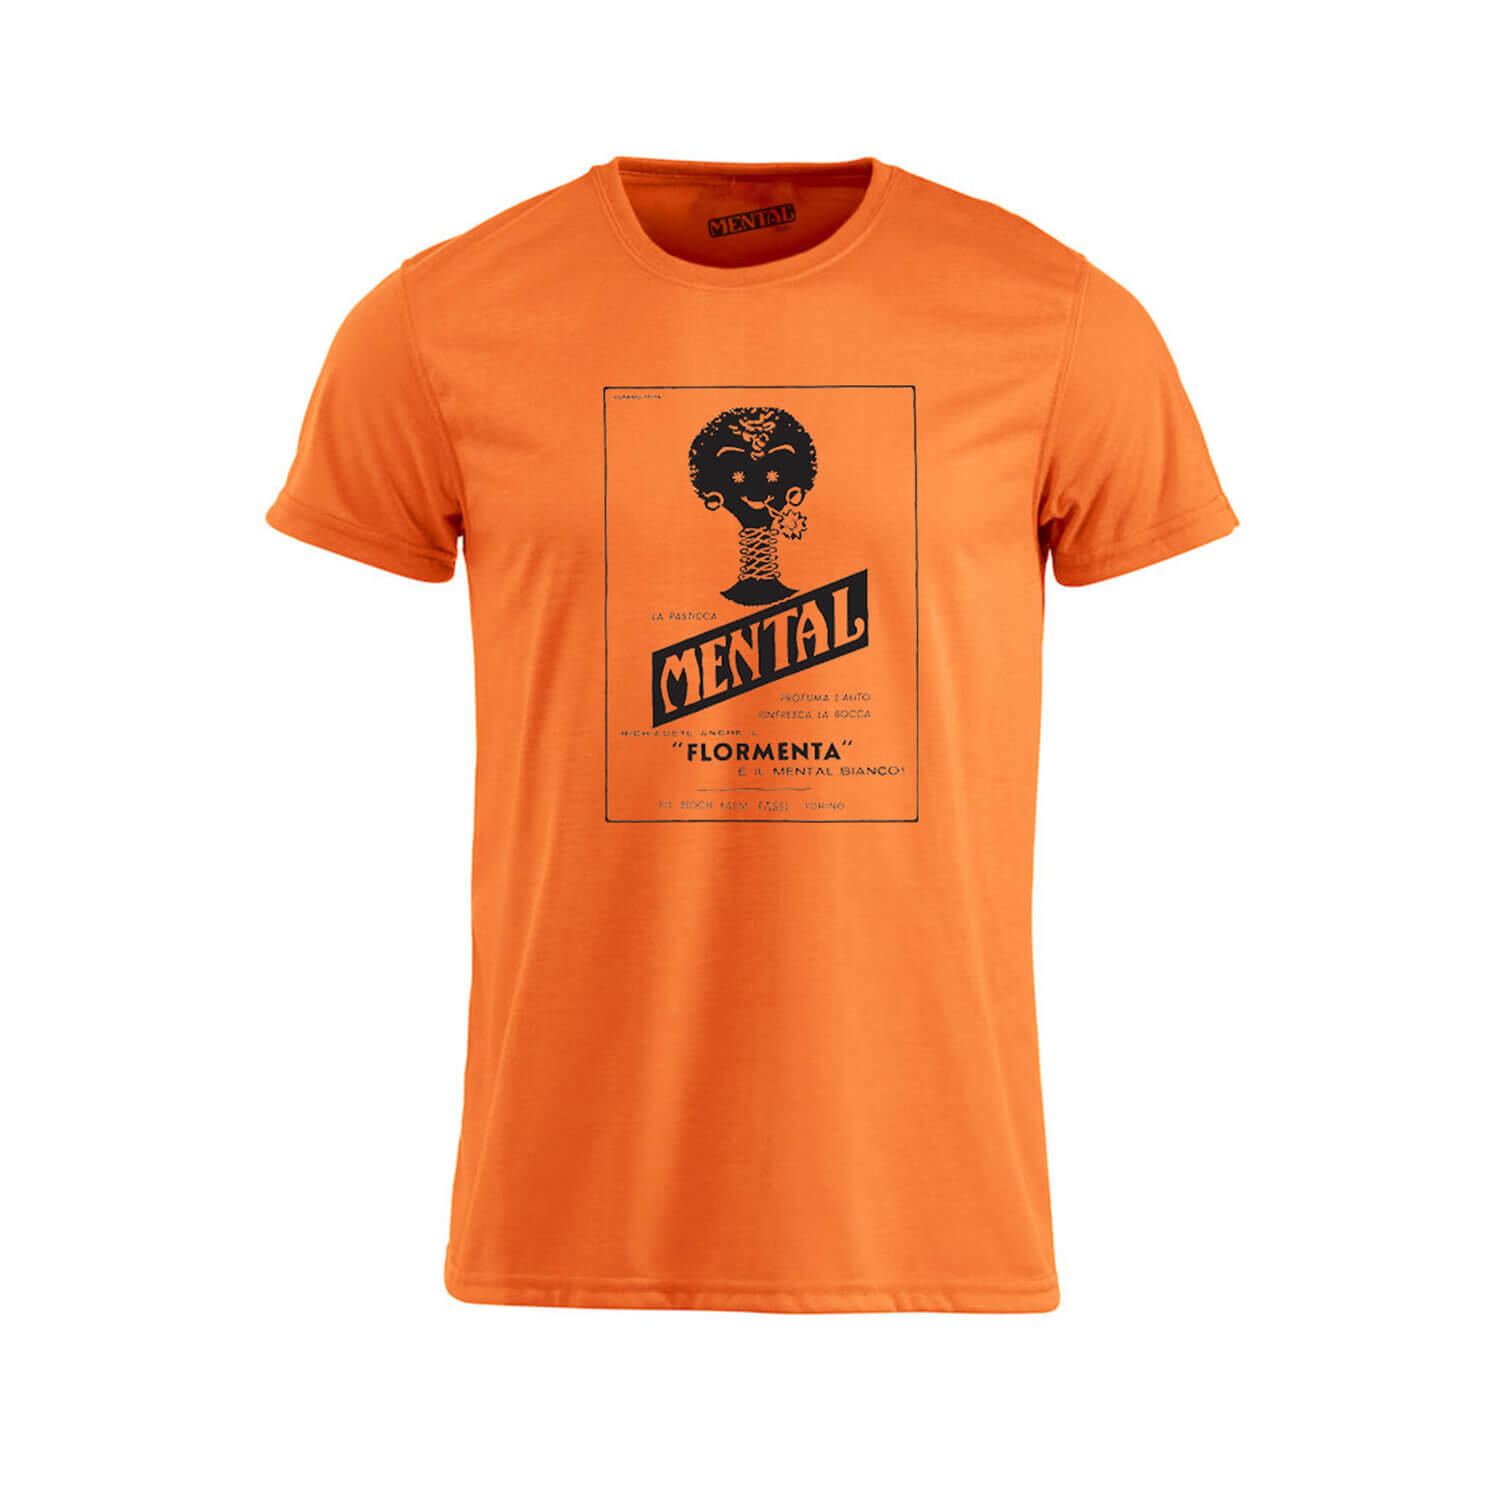 T-shirt arancio fluo Mental Vintage - taglia S - T-shirt